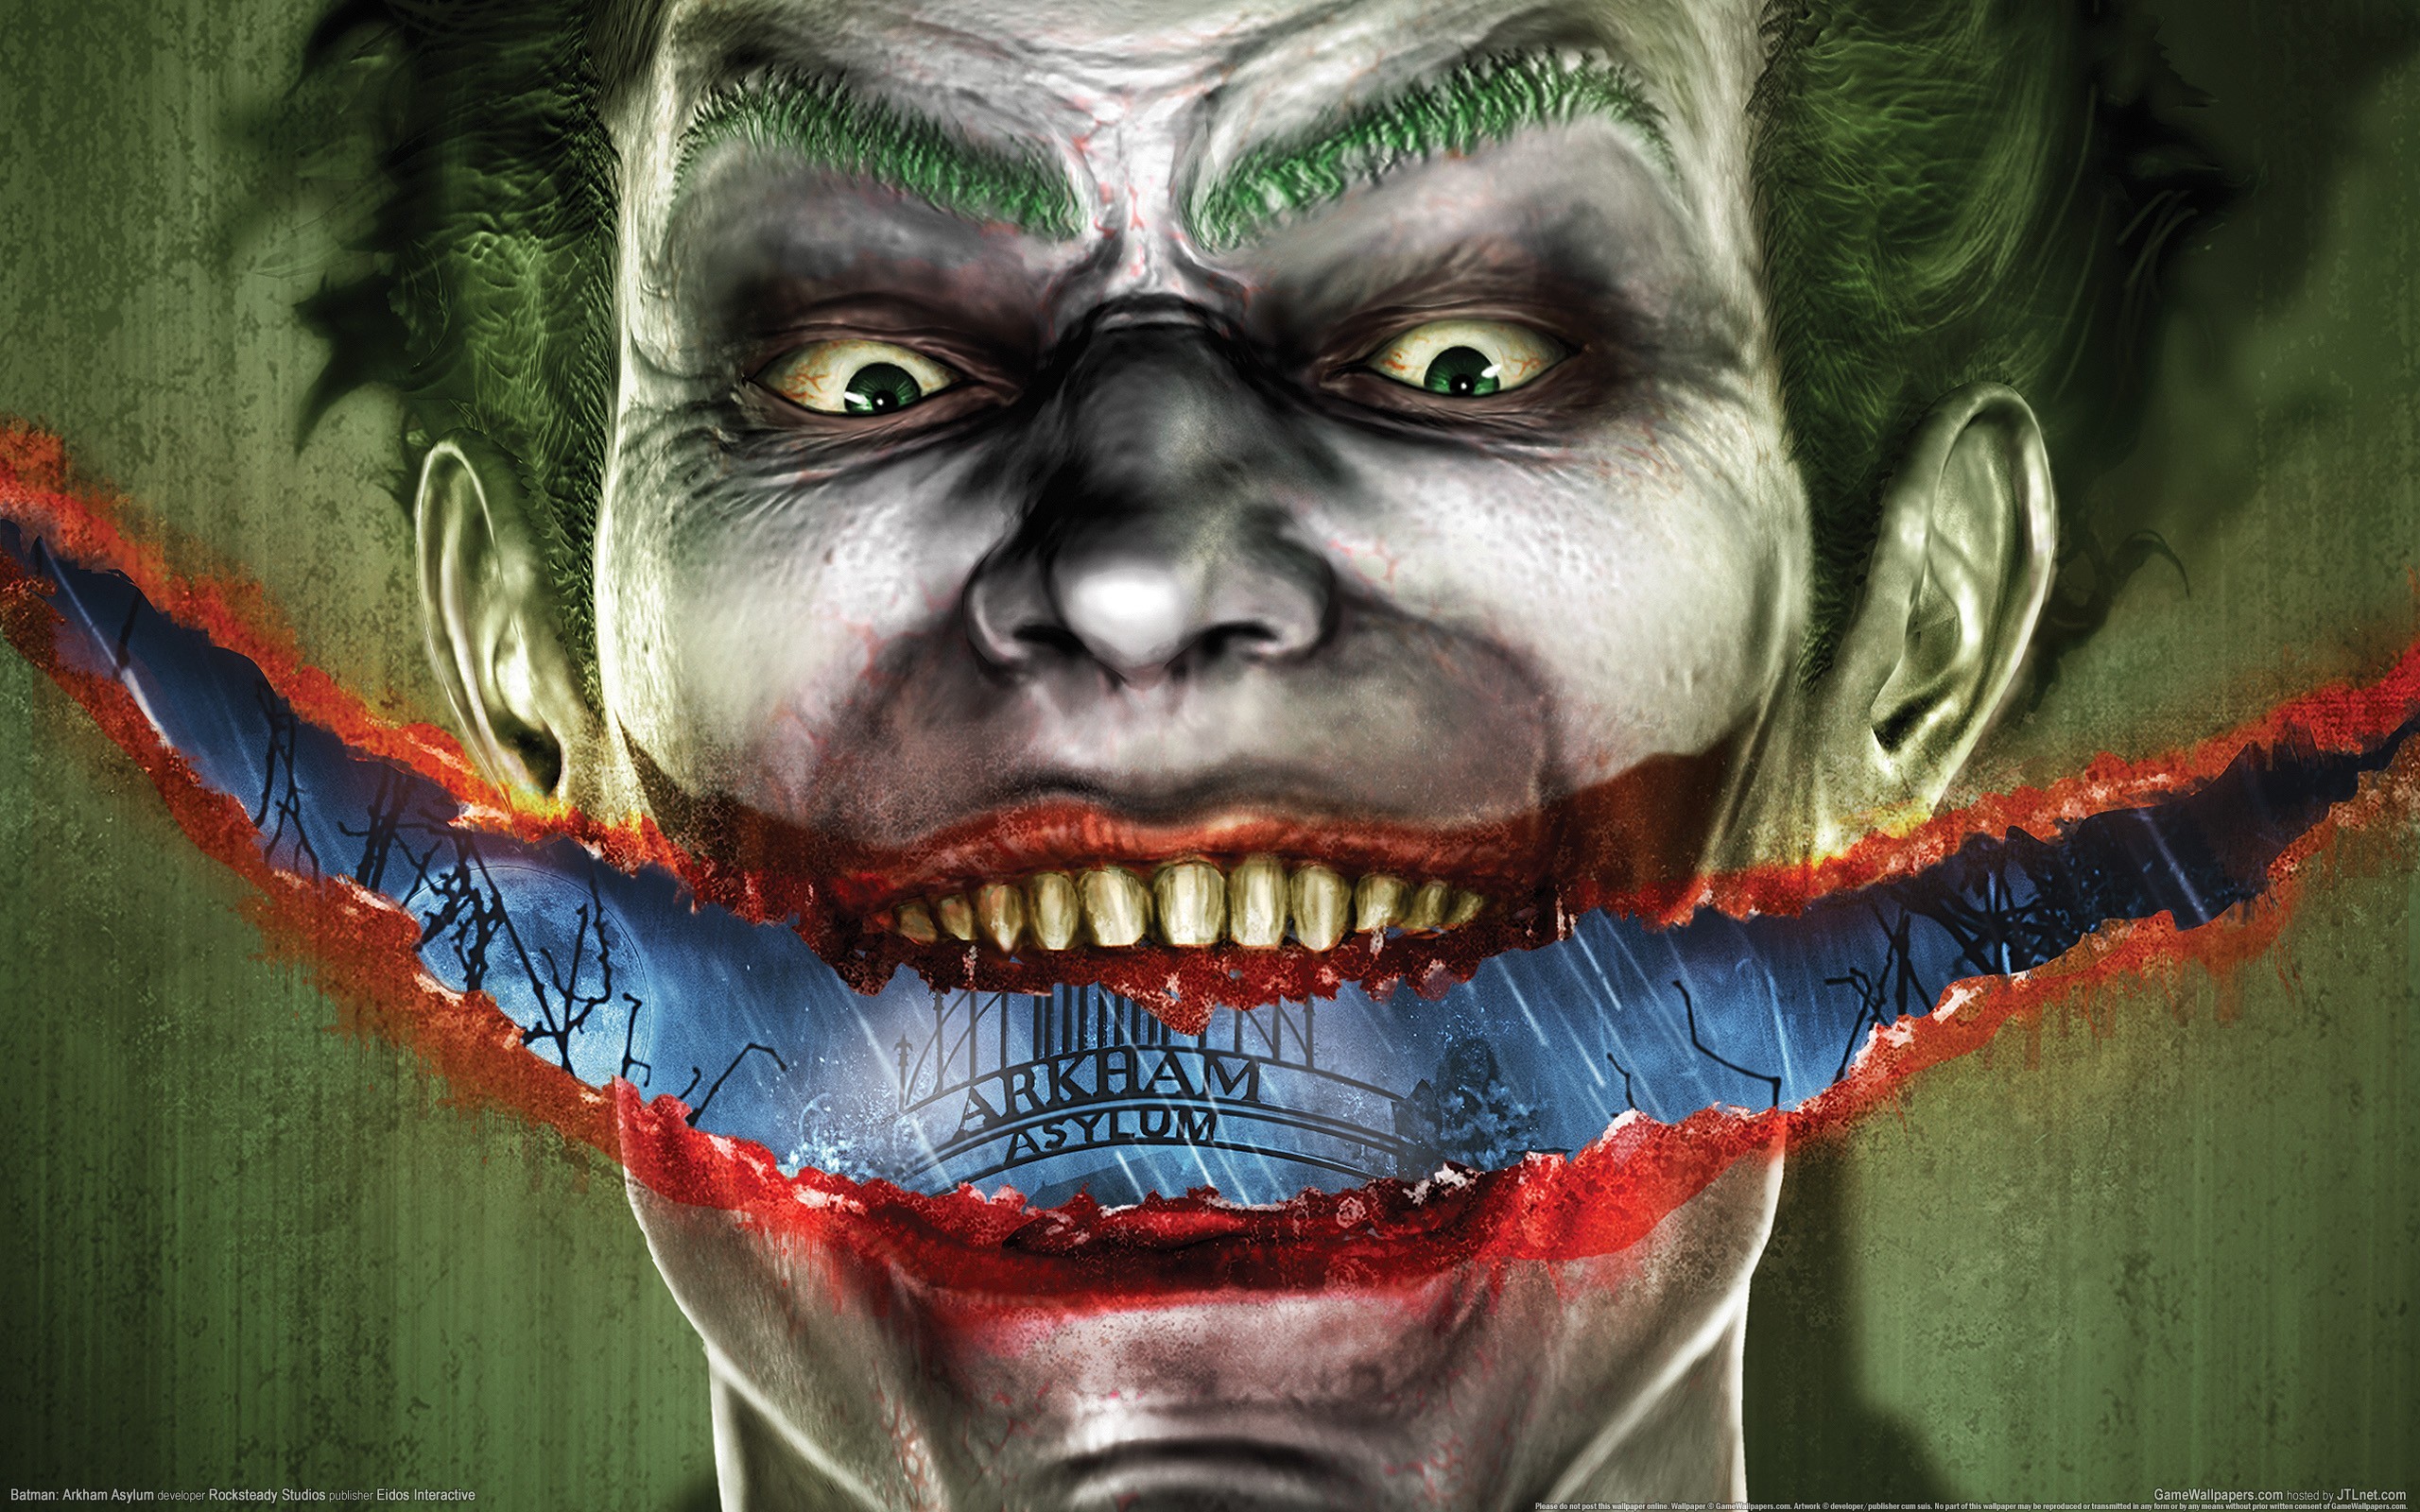 General 2560x1600 Batman Joker Batman: Arkham Asylum Rocksteady Studios villains DC Comics video games watermarked teeth green hair green eyes looking at viewer face